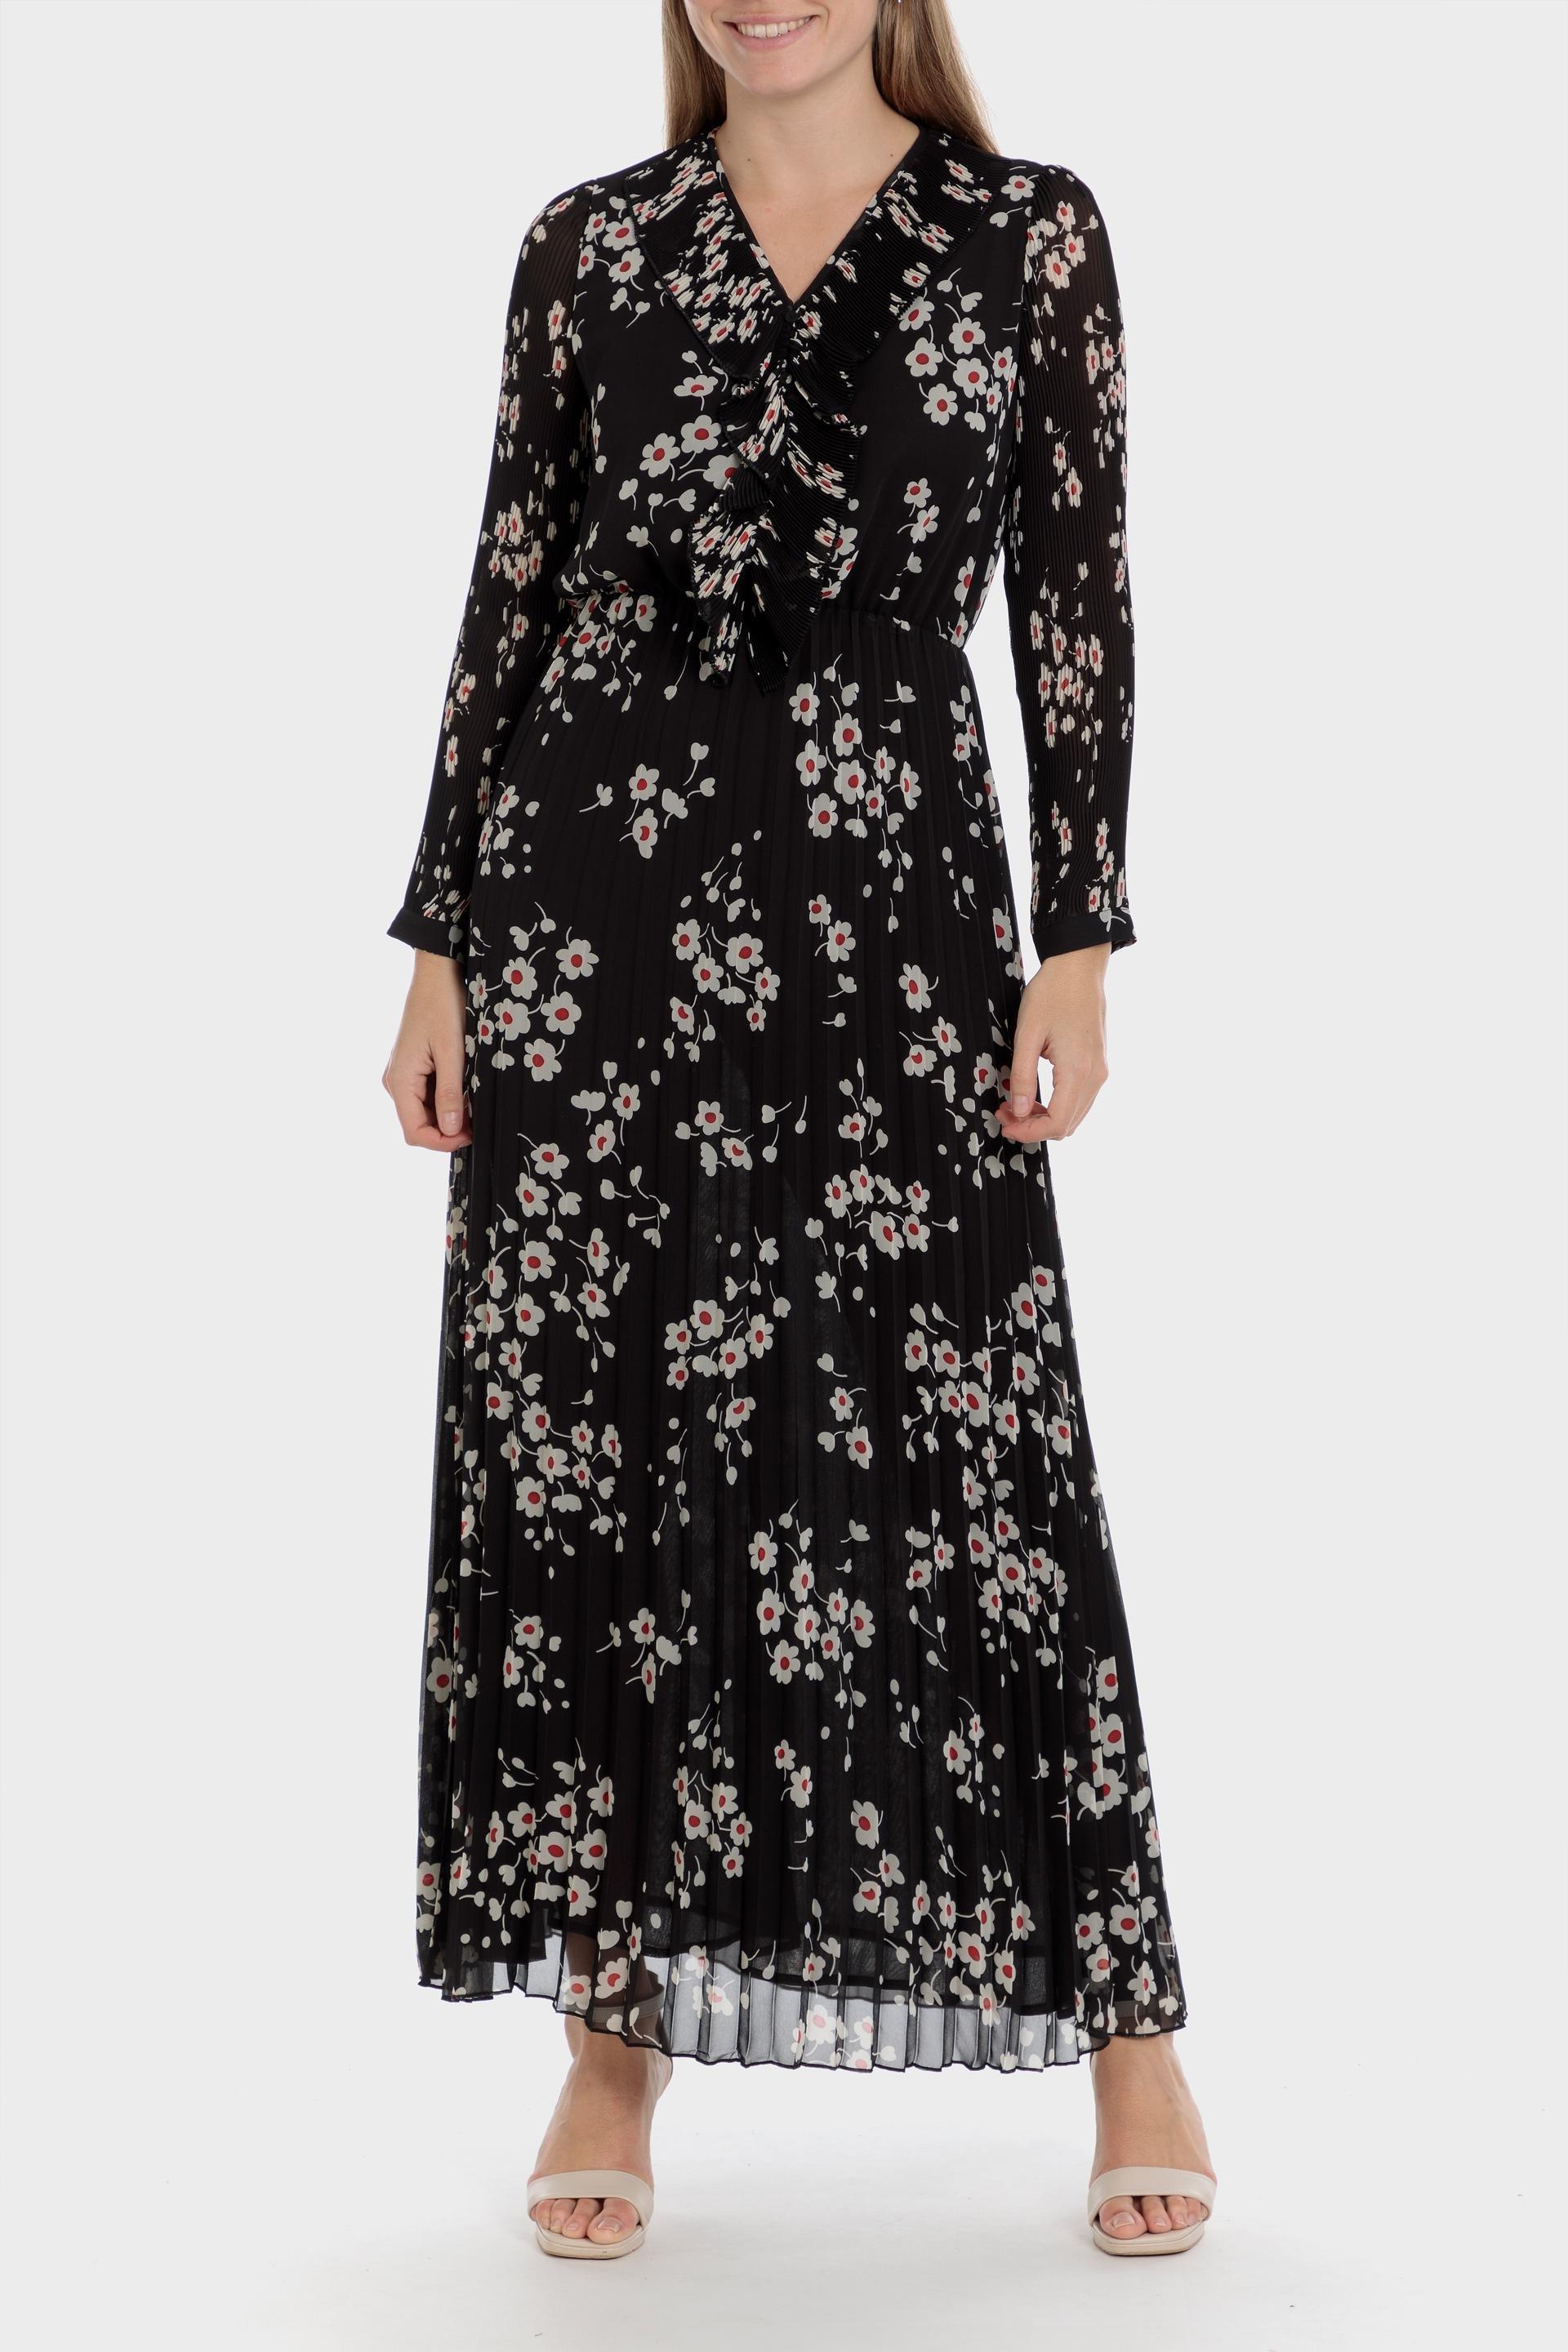 Punt Roma - Black Floral Print Dress